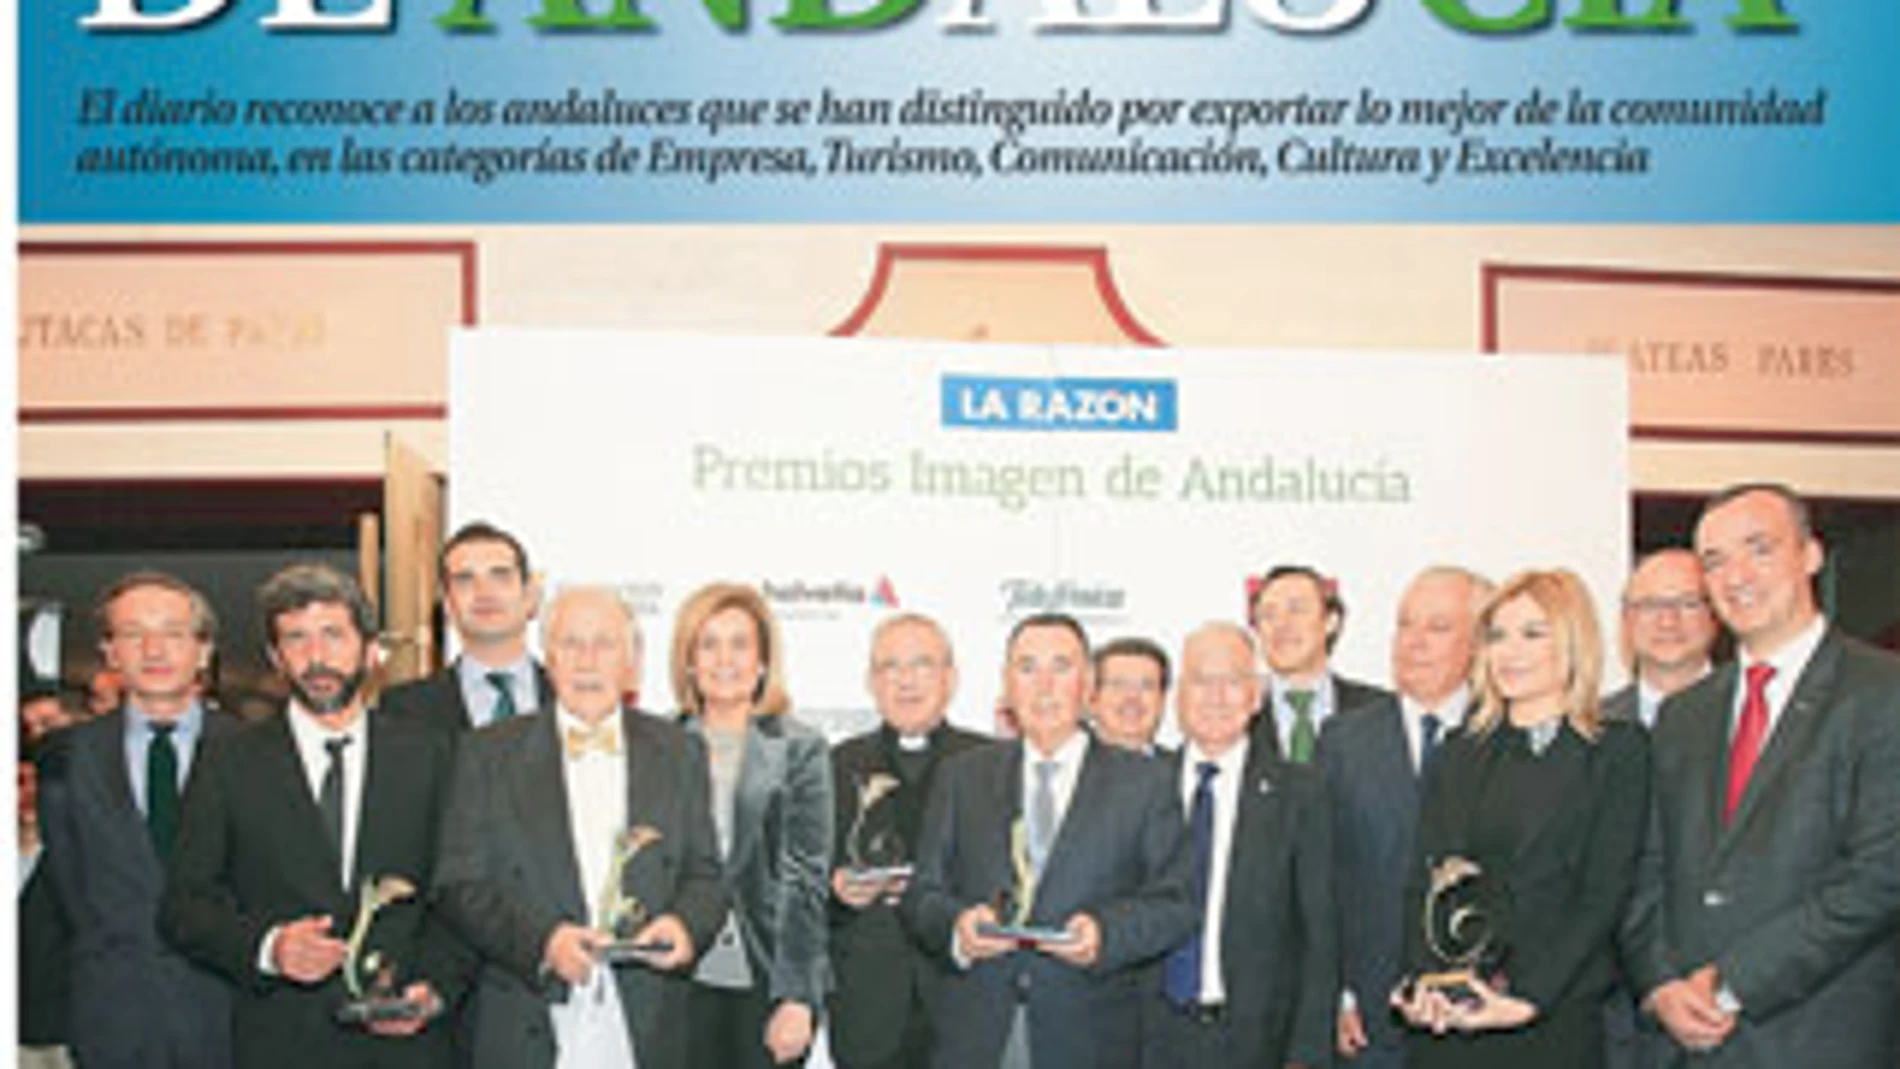 Premios Imagen de Andalucía